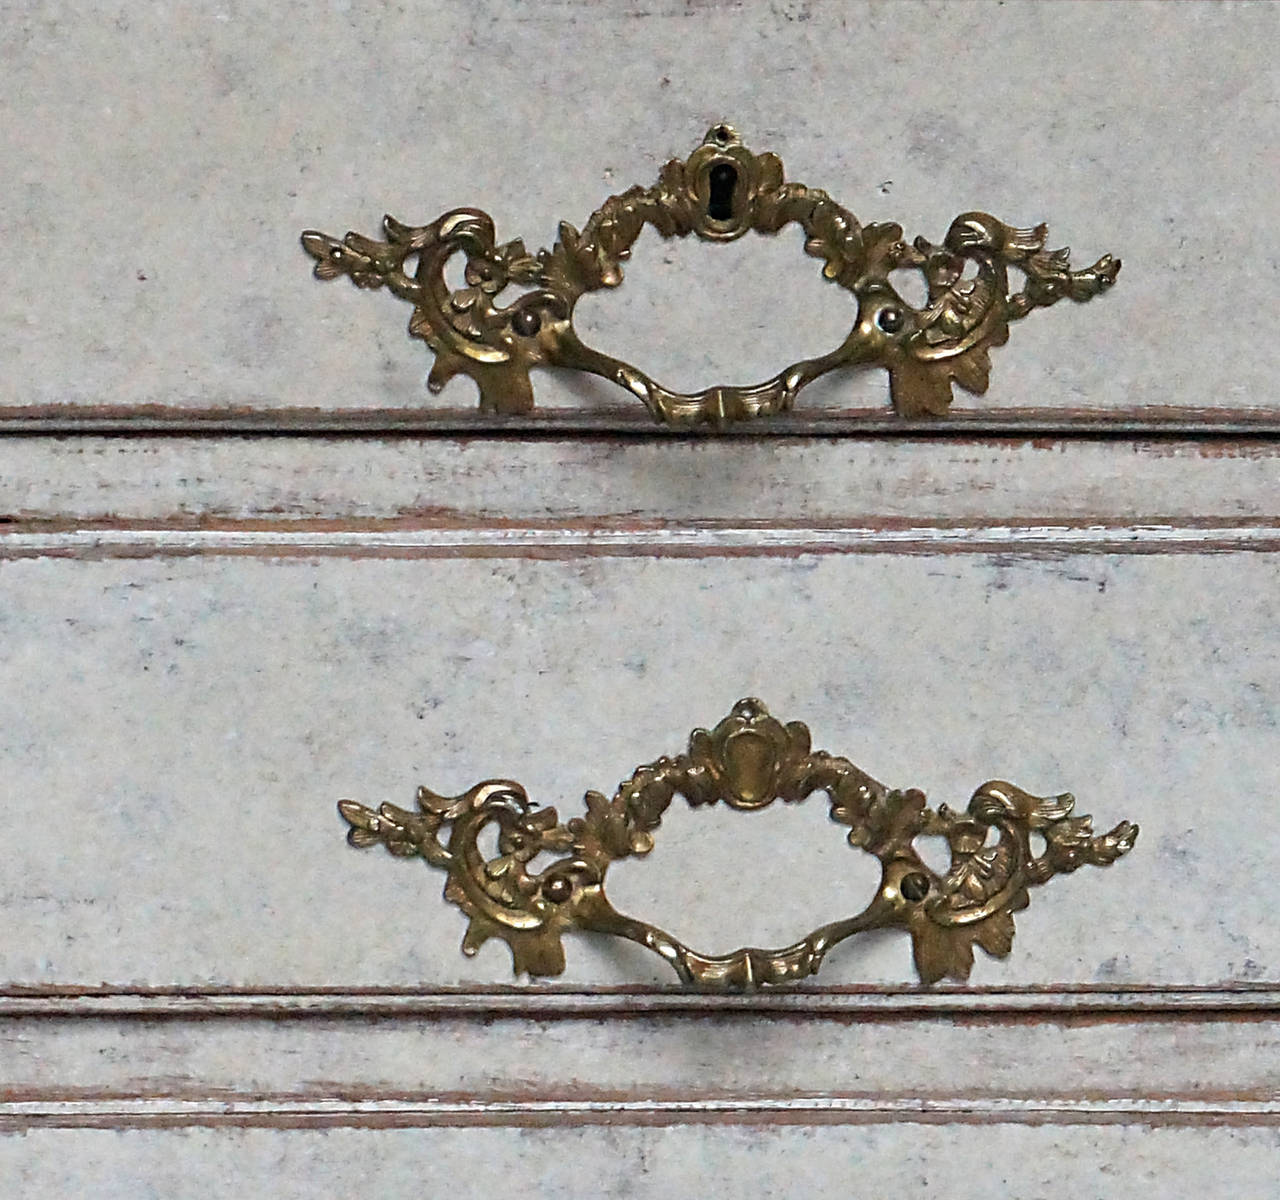 Wood Period Rococo Cabinet